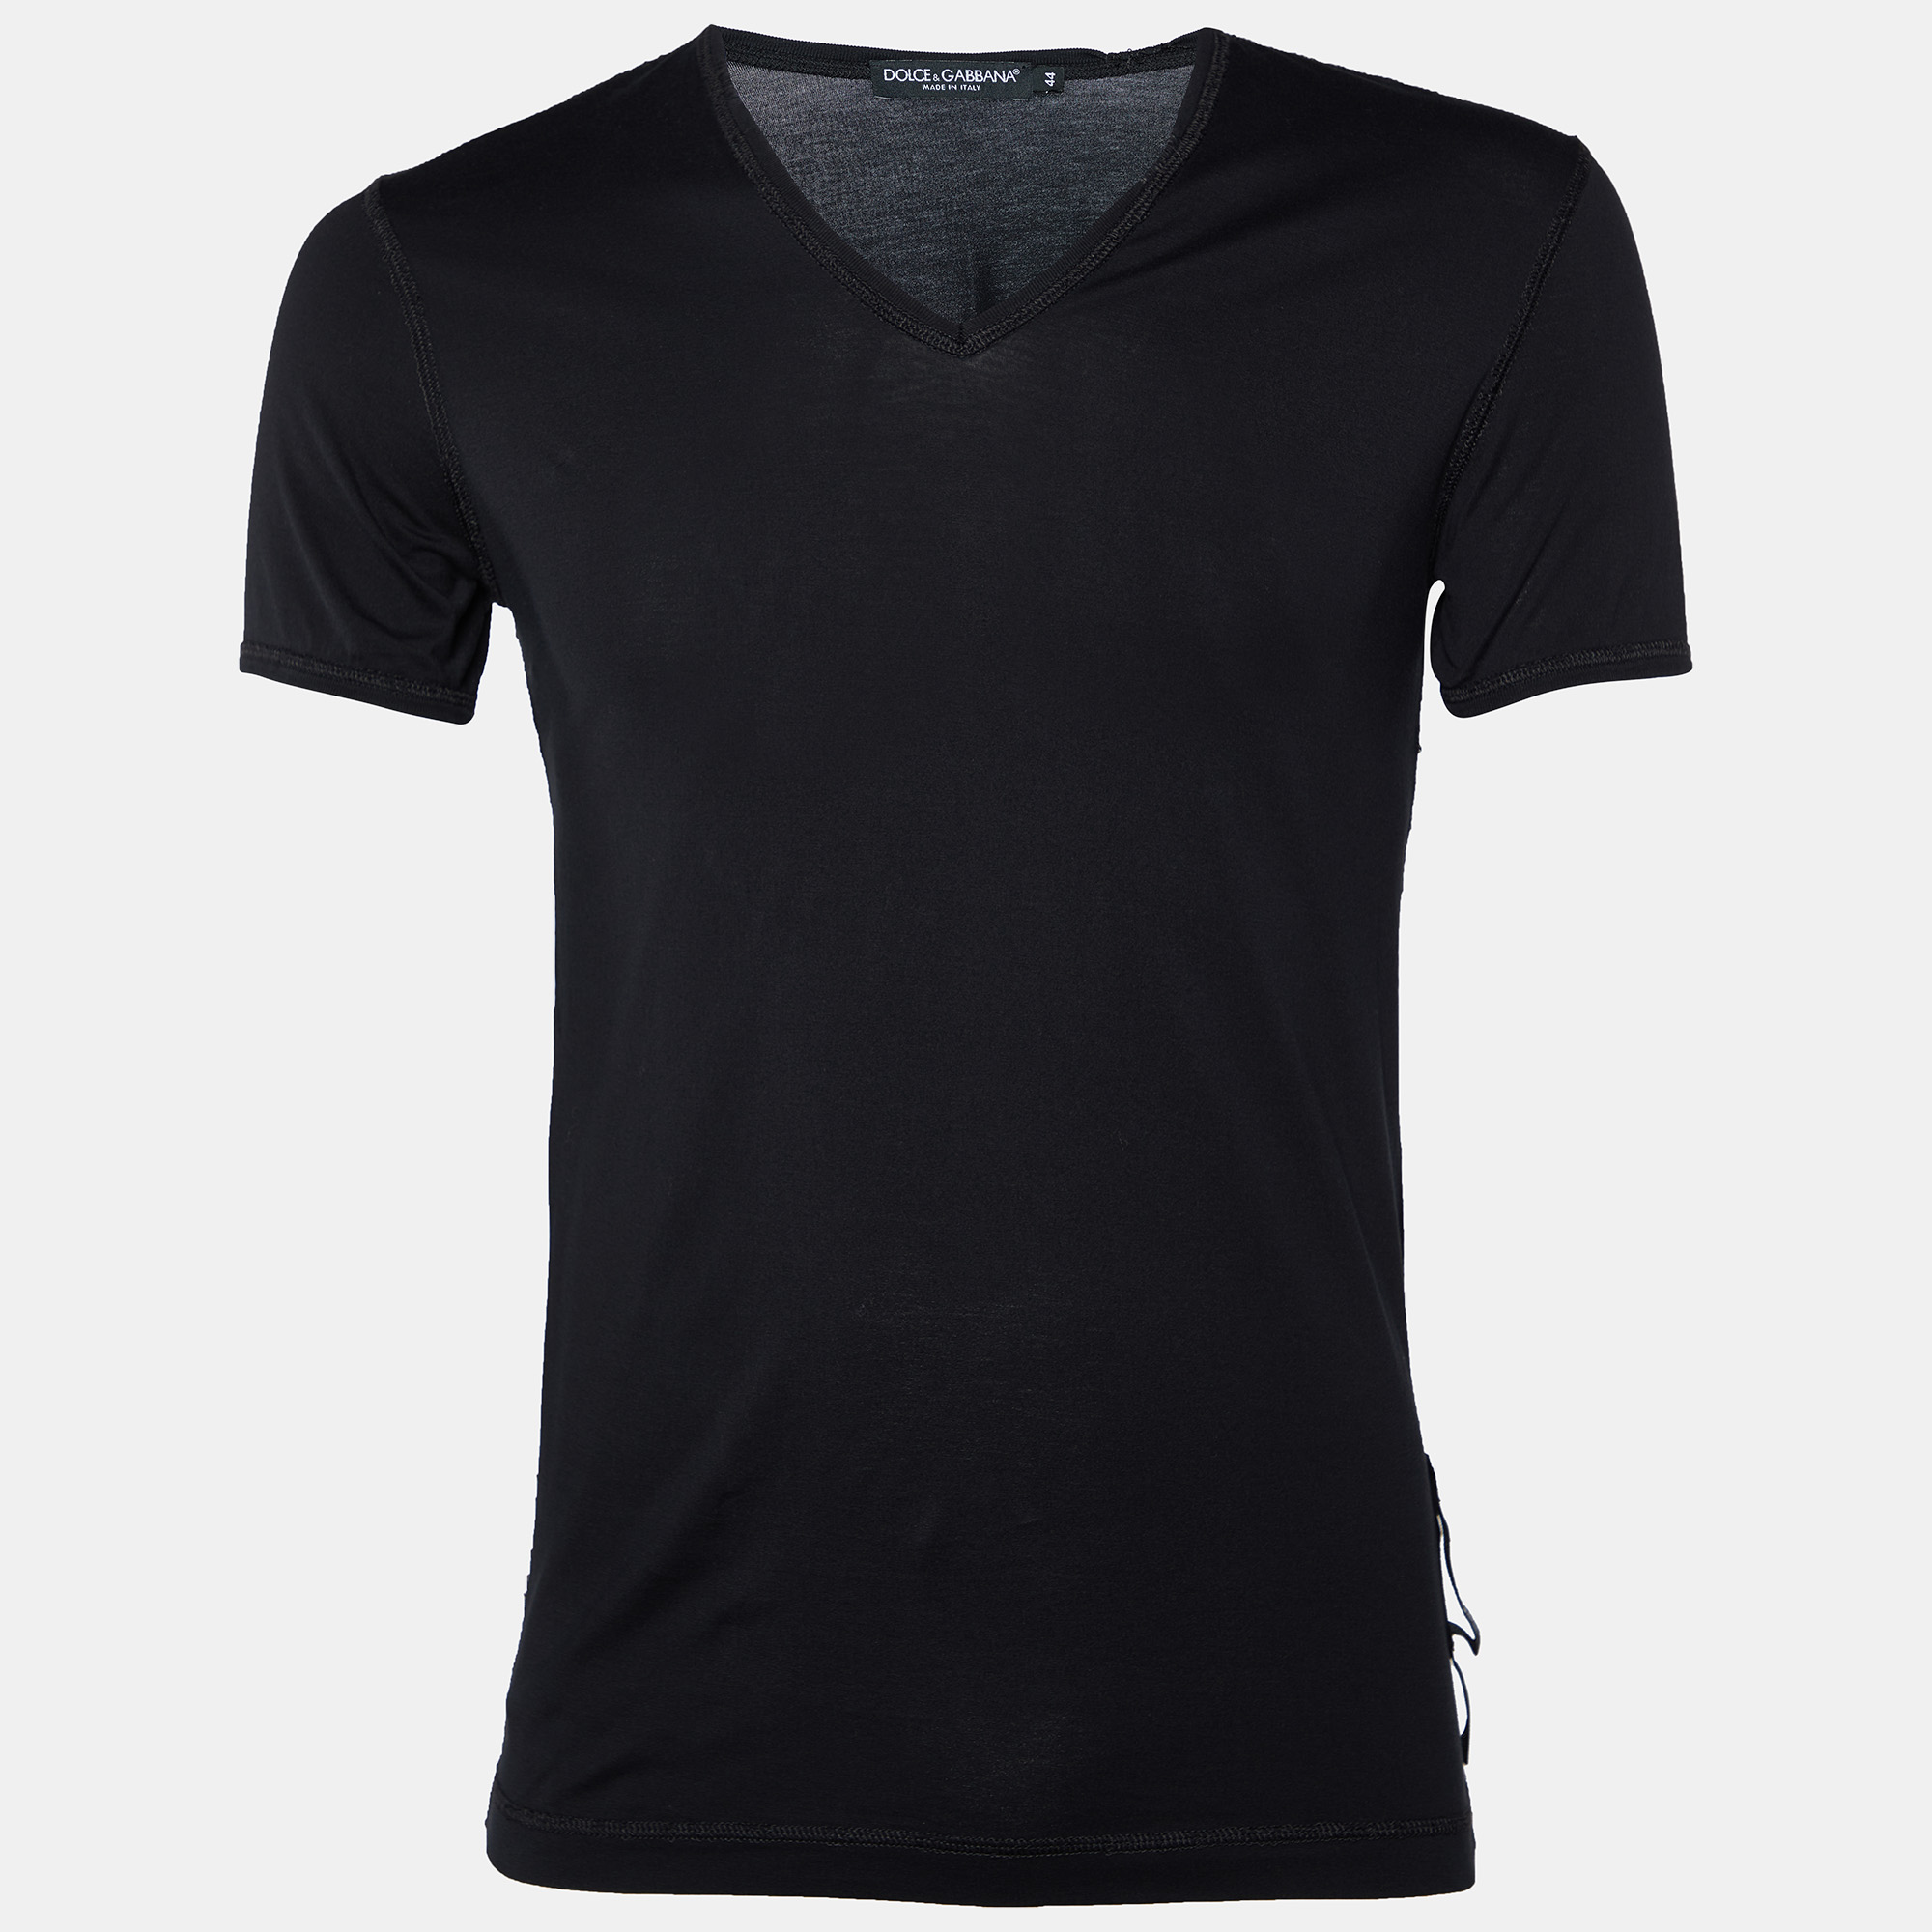 Dolce & Gabbana Black Cotton Knit Overlock V-Neck T-Shirt XS